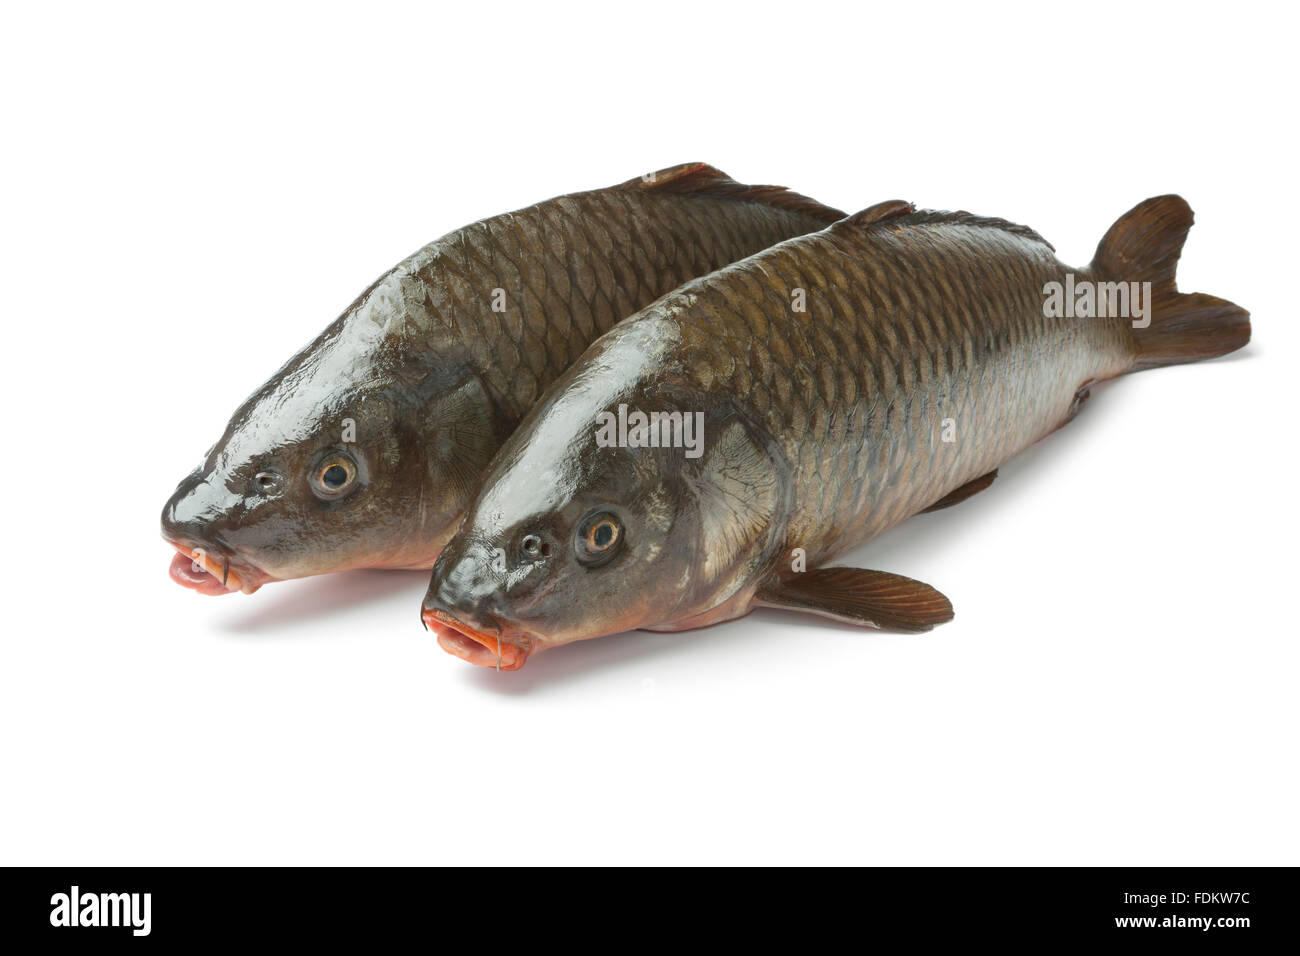 Two fresh whole carp fishes at white background Stock Photo